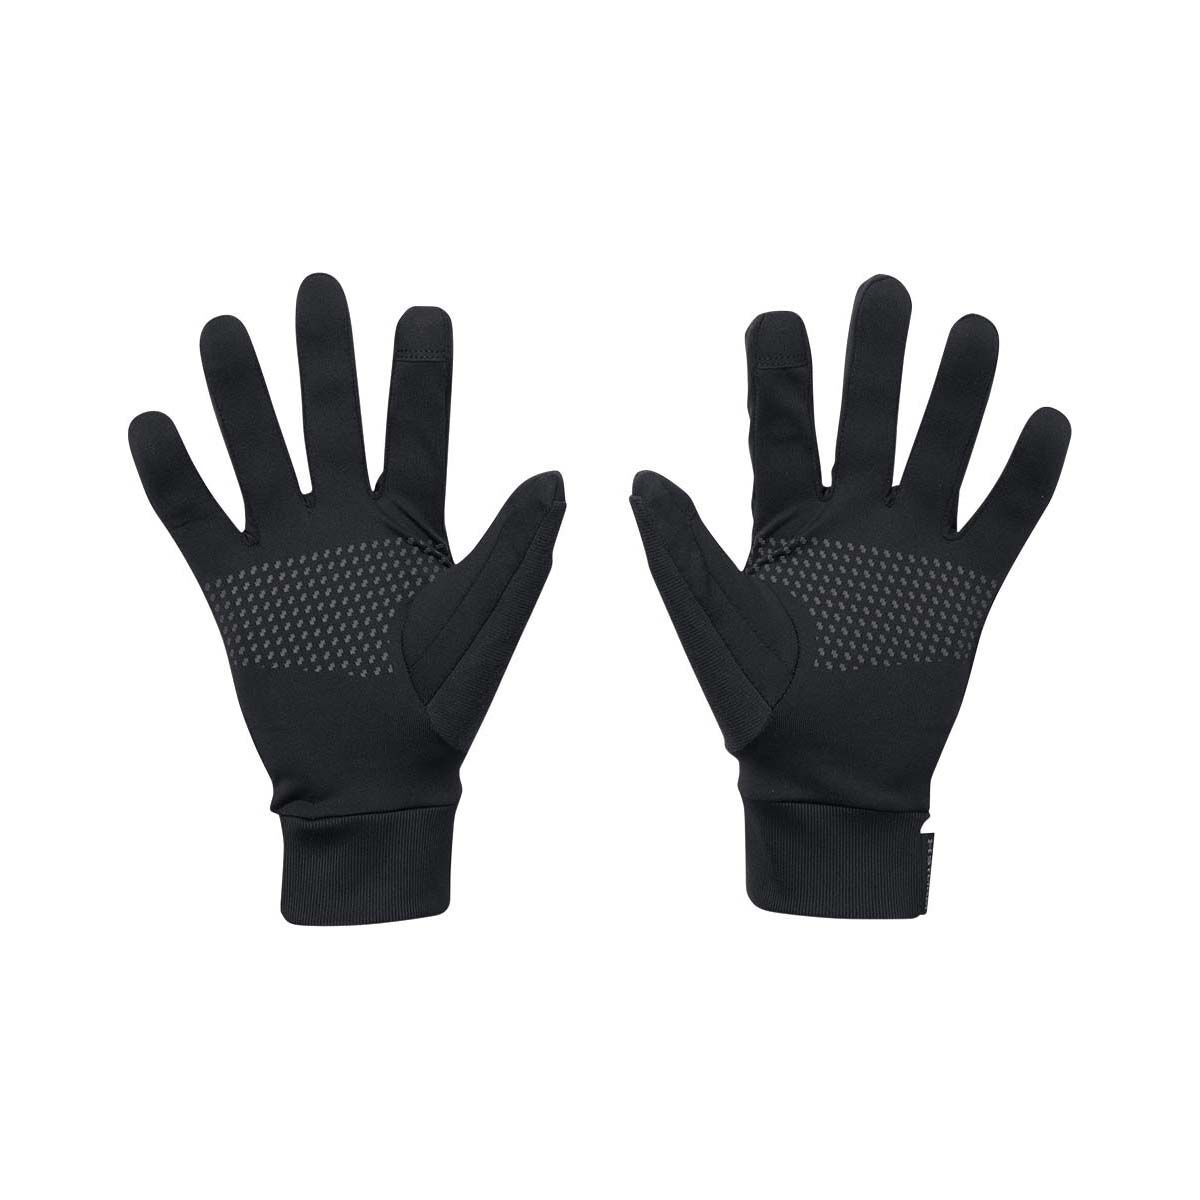 Huk Men's Liner Glove - Black - S